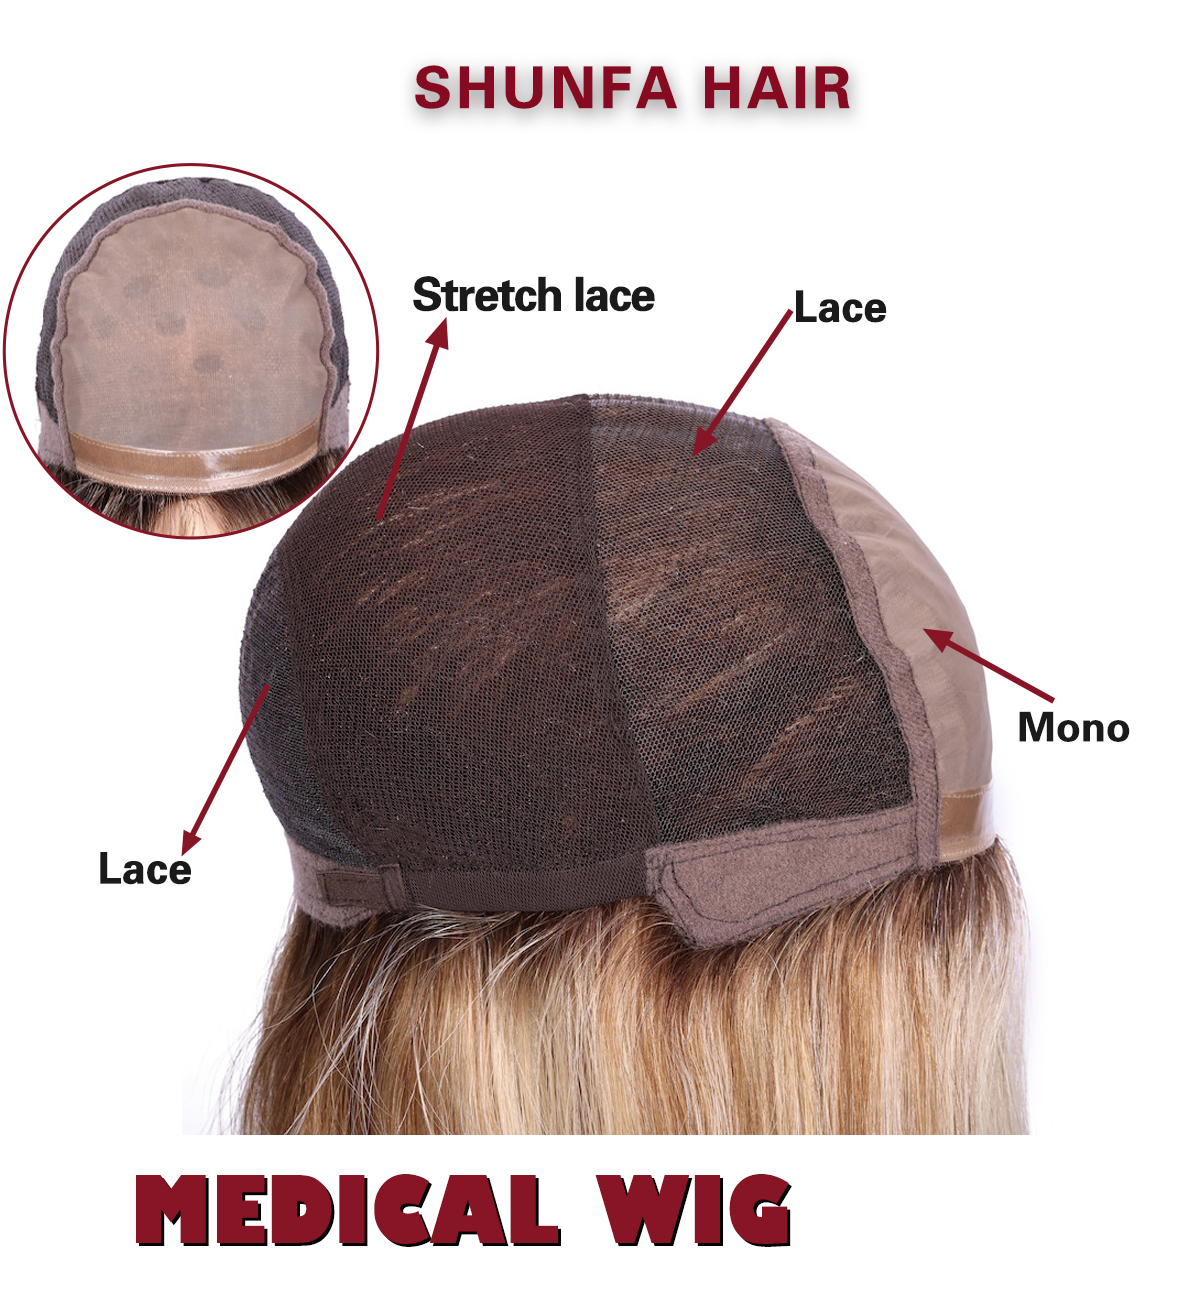 shunfa hair medical wig model.png